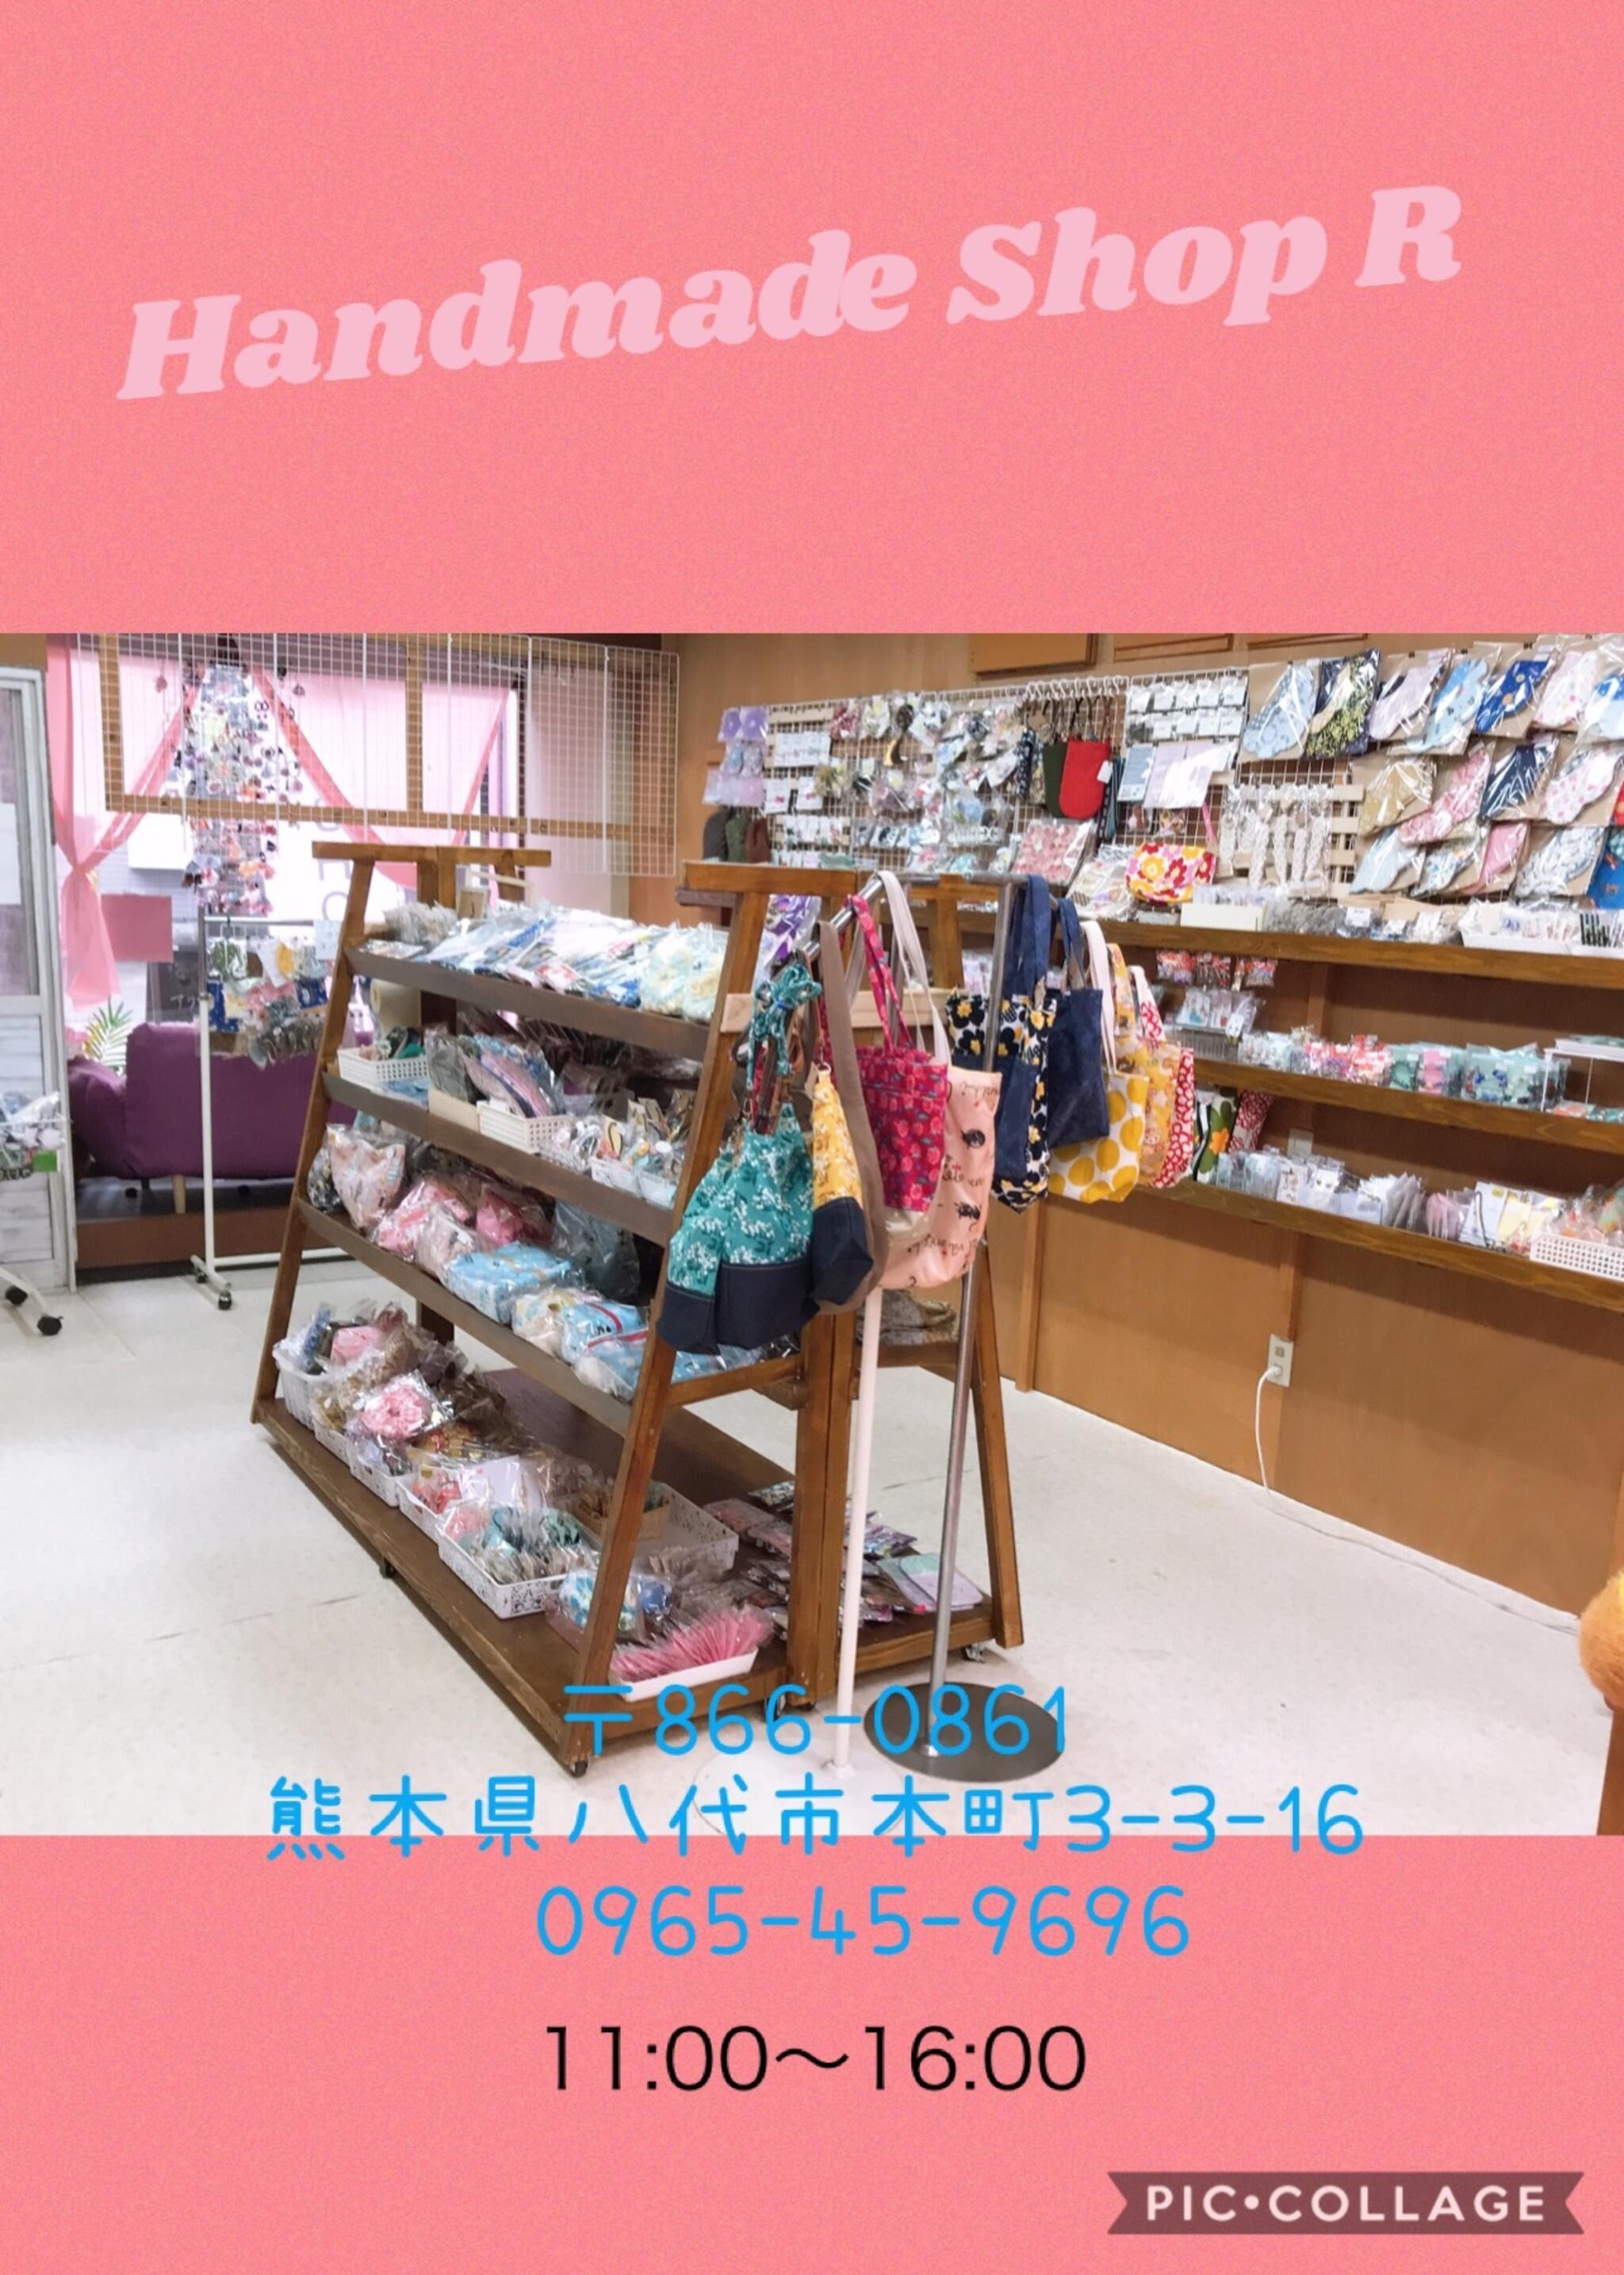 Handmade Shop Rの代表写真1